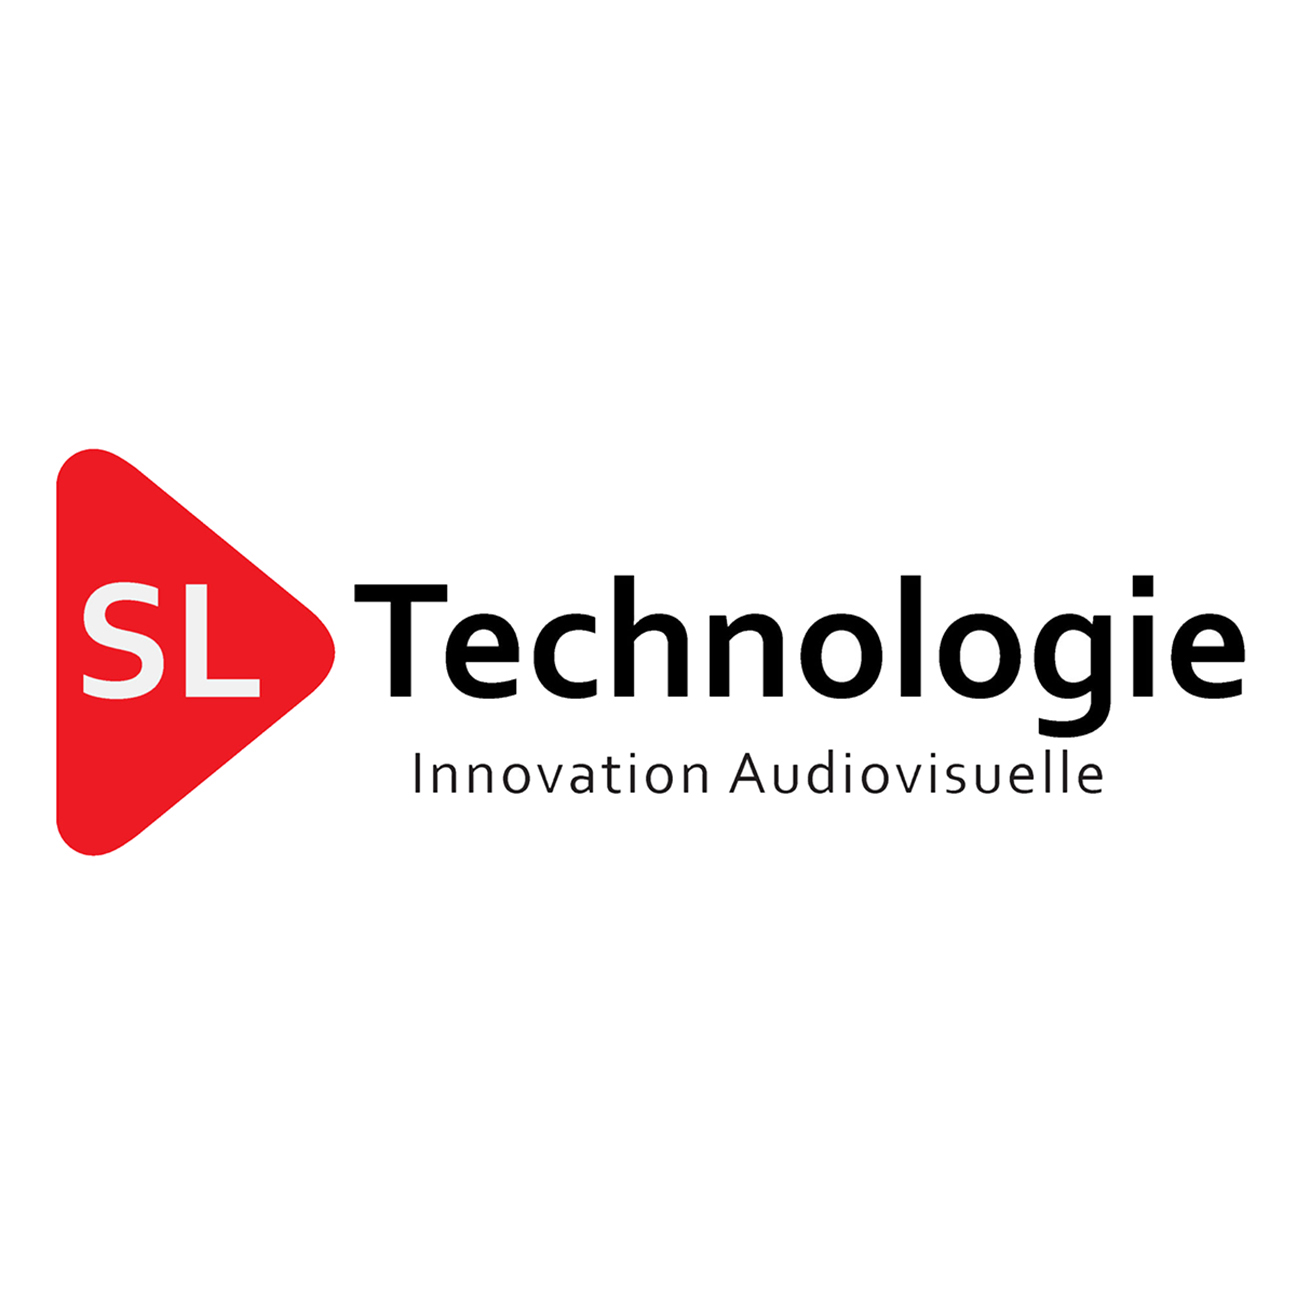 SL Technologie